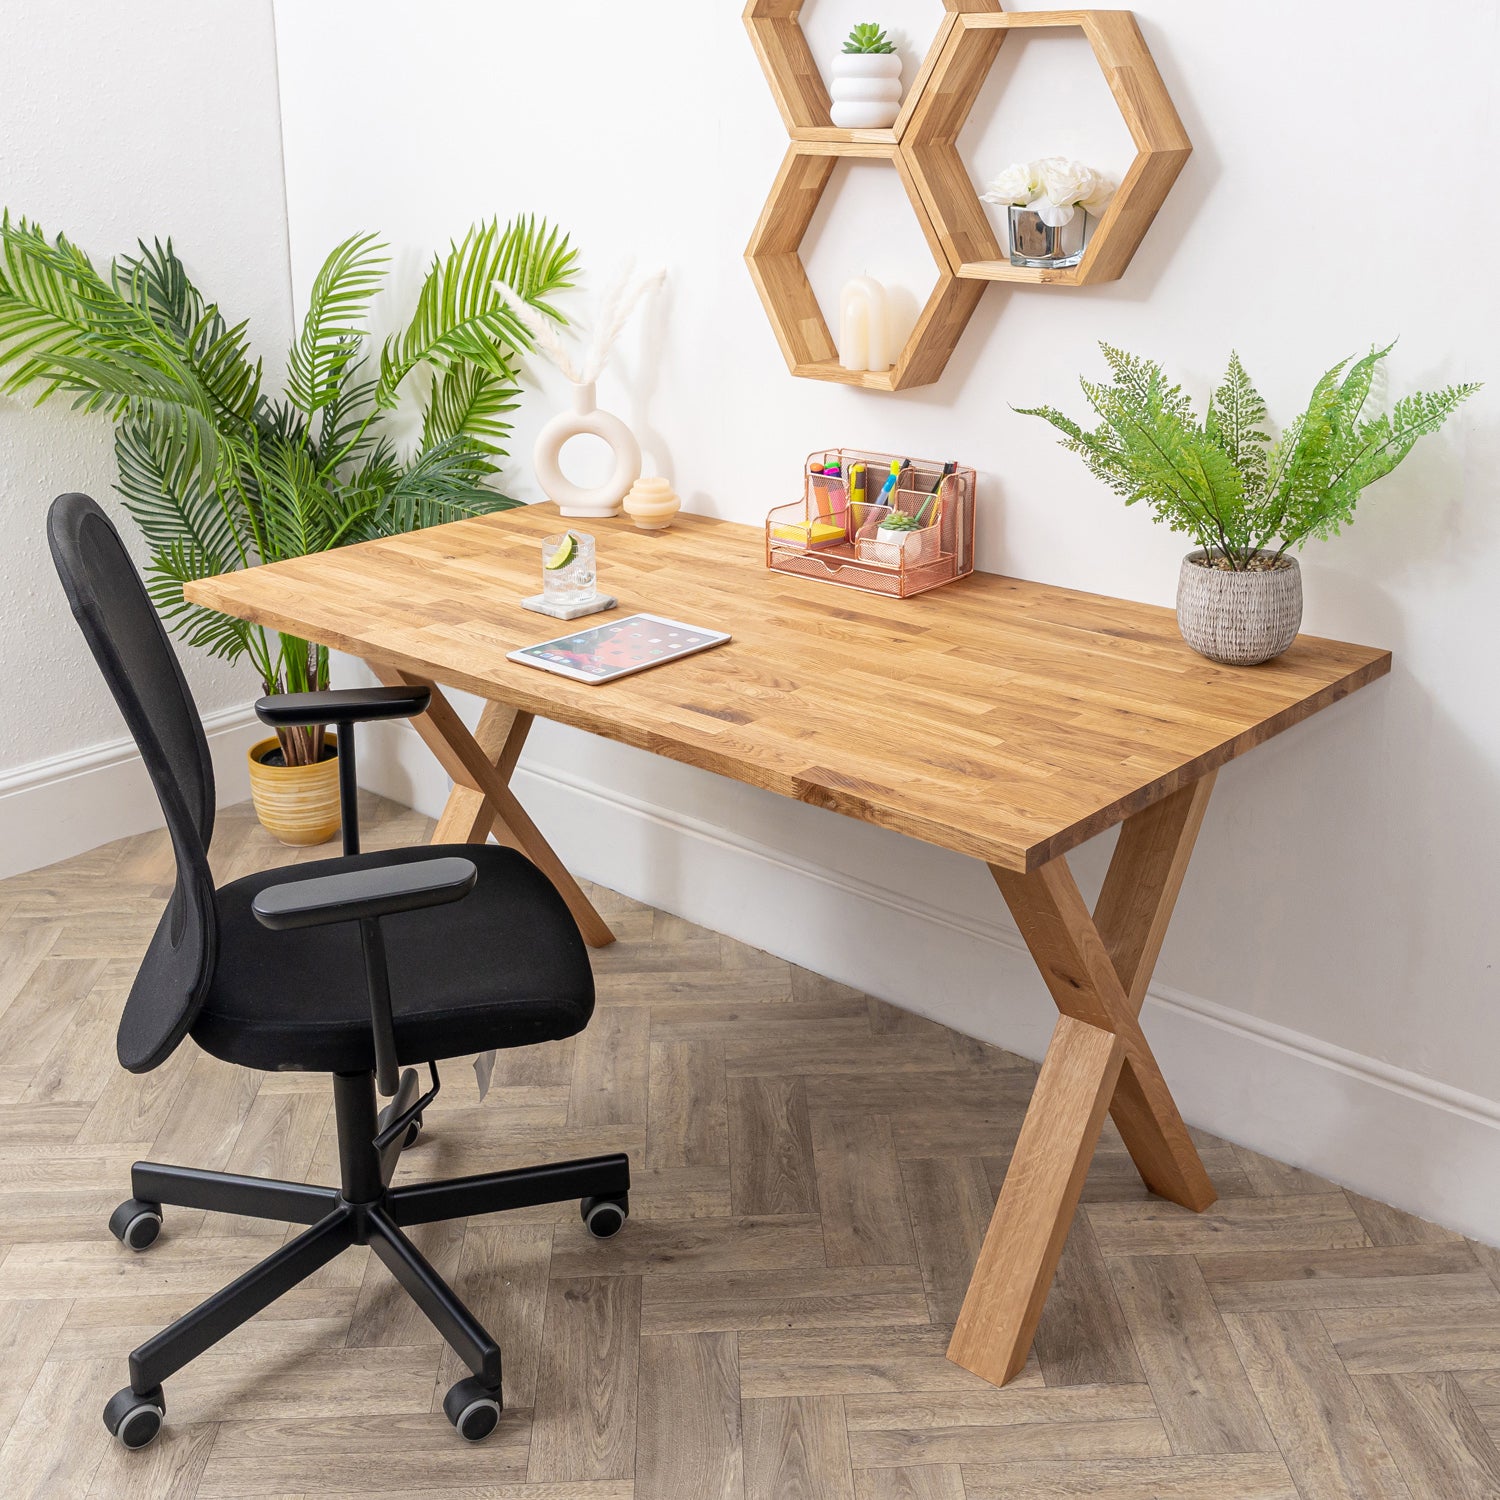 Oak Solid Wood Desk With Wooden X Legs - 27mm Thick Desktop